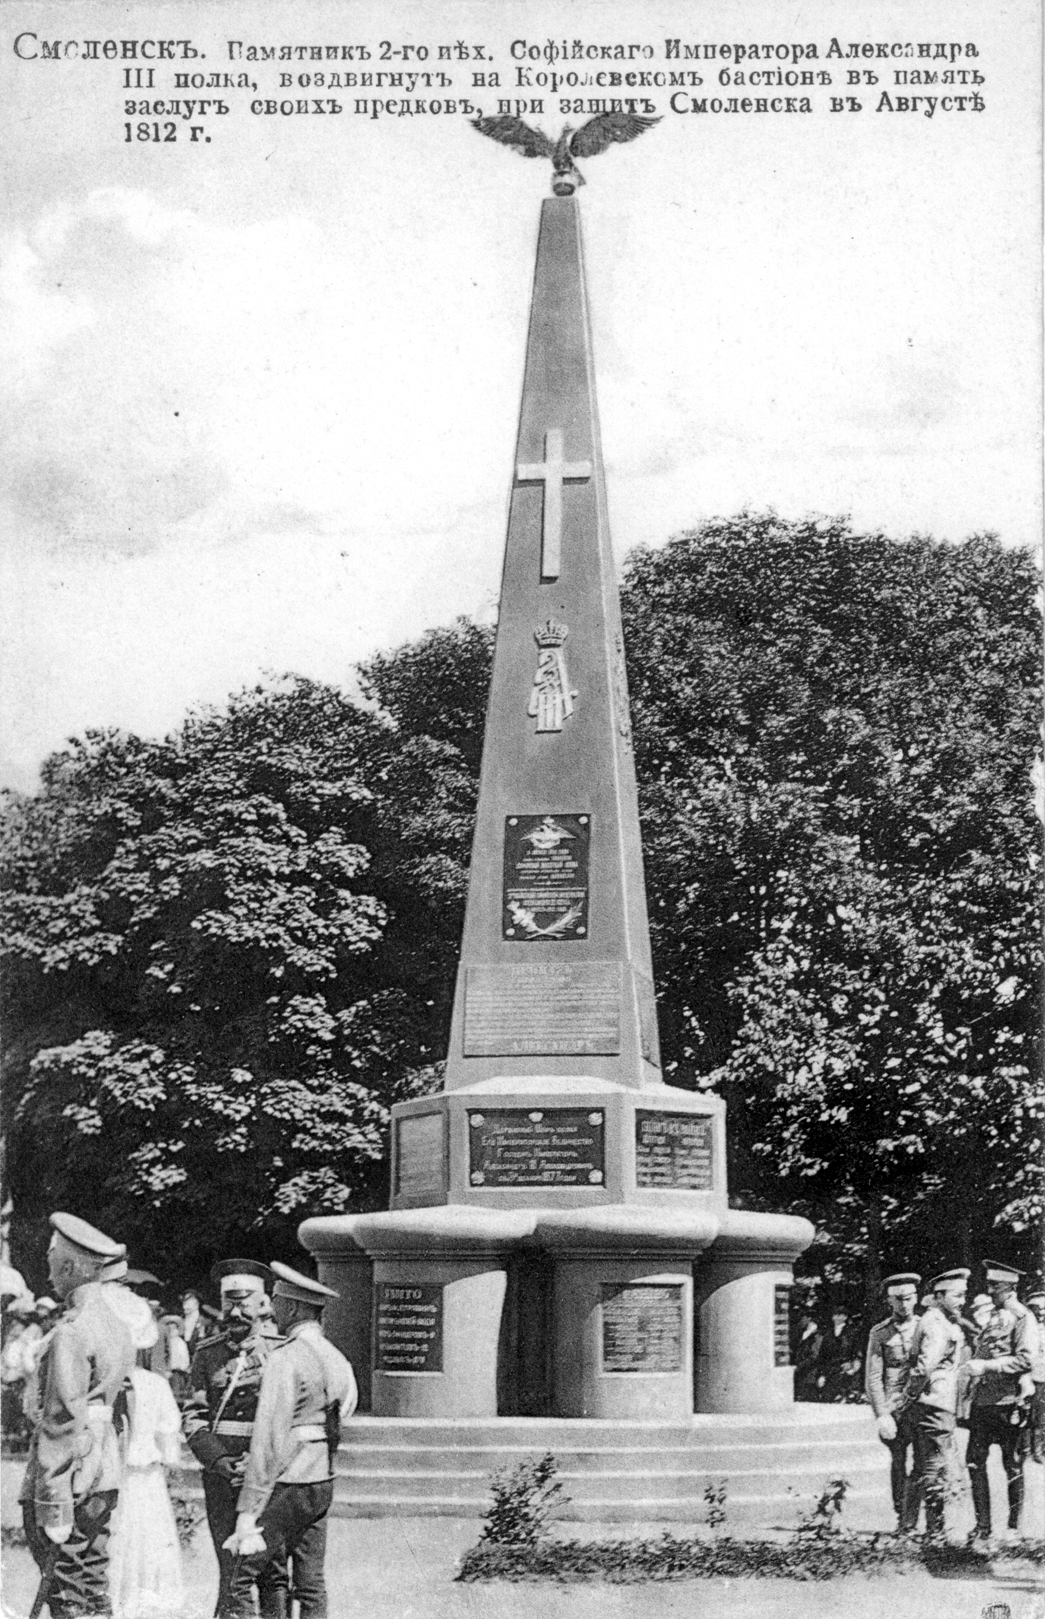 Monument to Sofia Regiment 2